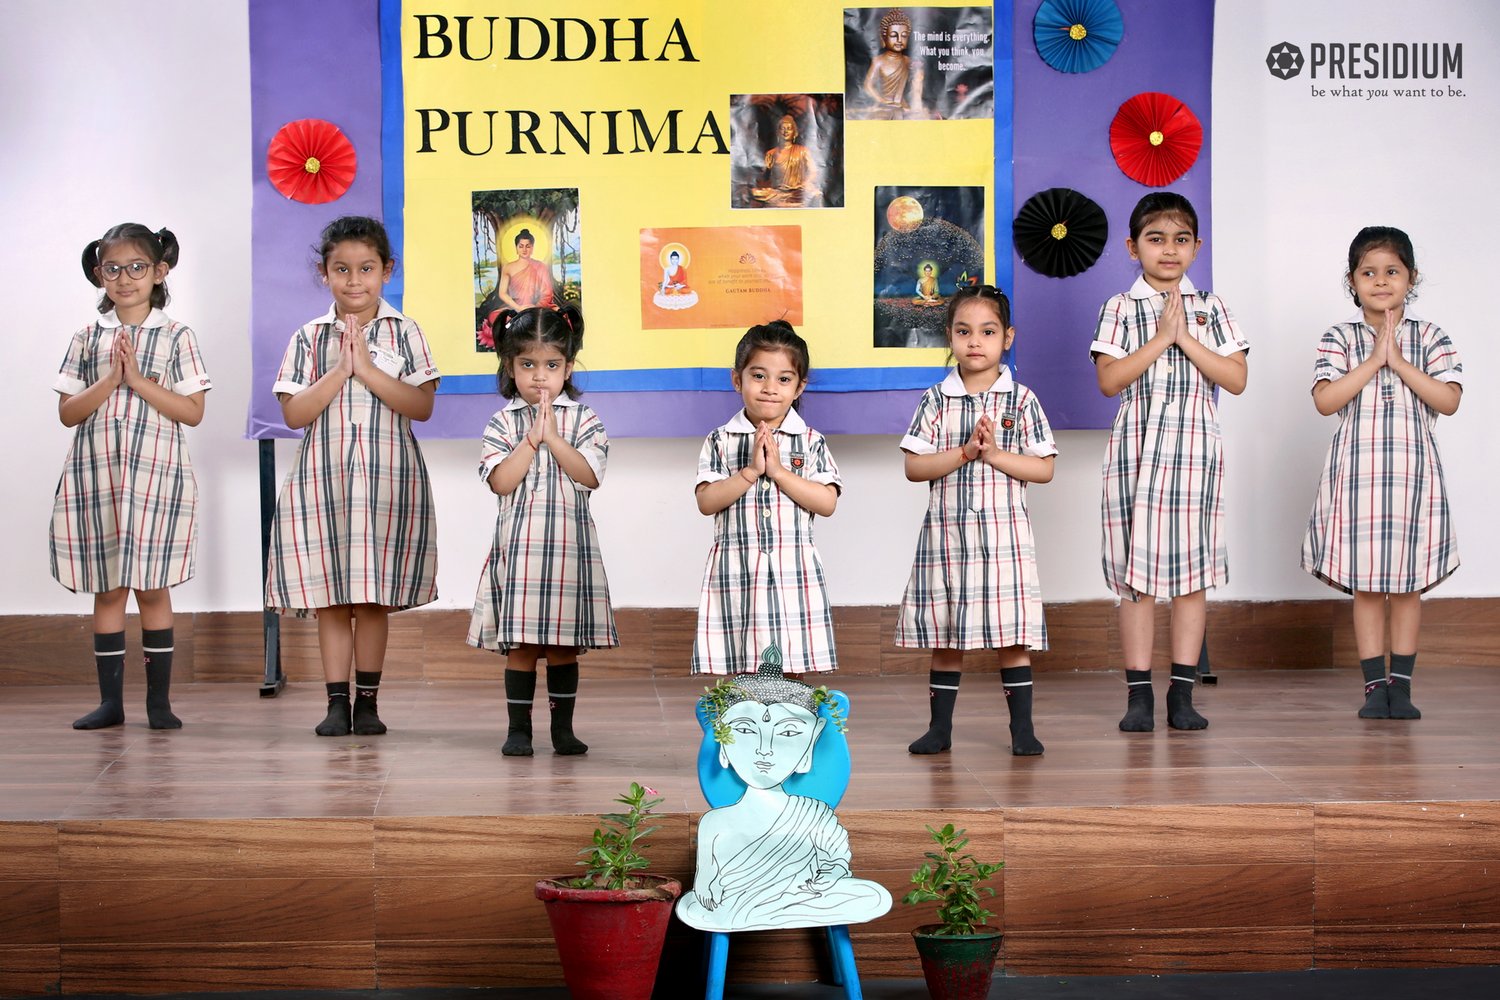 Presidium Pitampura, AN INFORMATIVE ASSEMBLY ON BUDDHA PURNIMA!